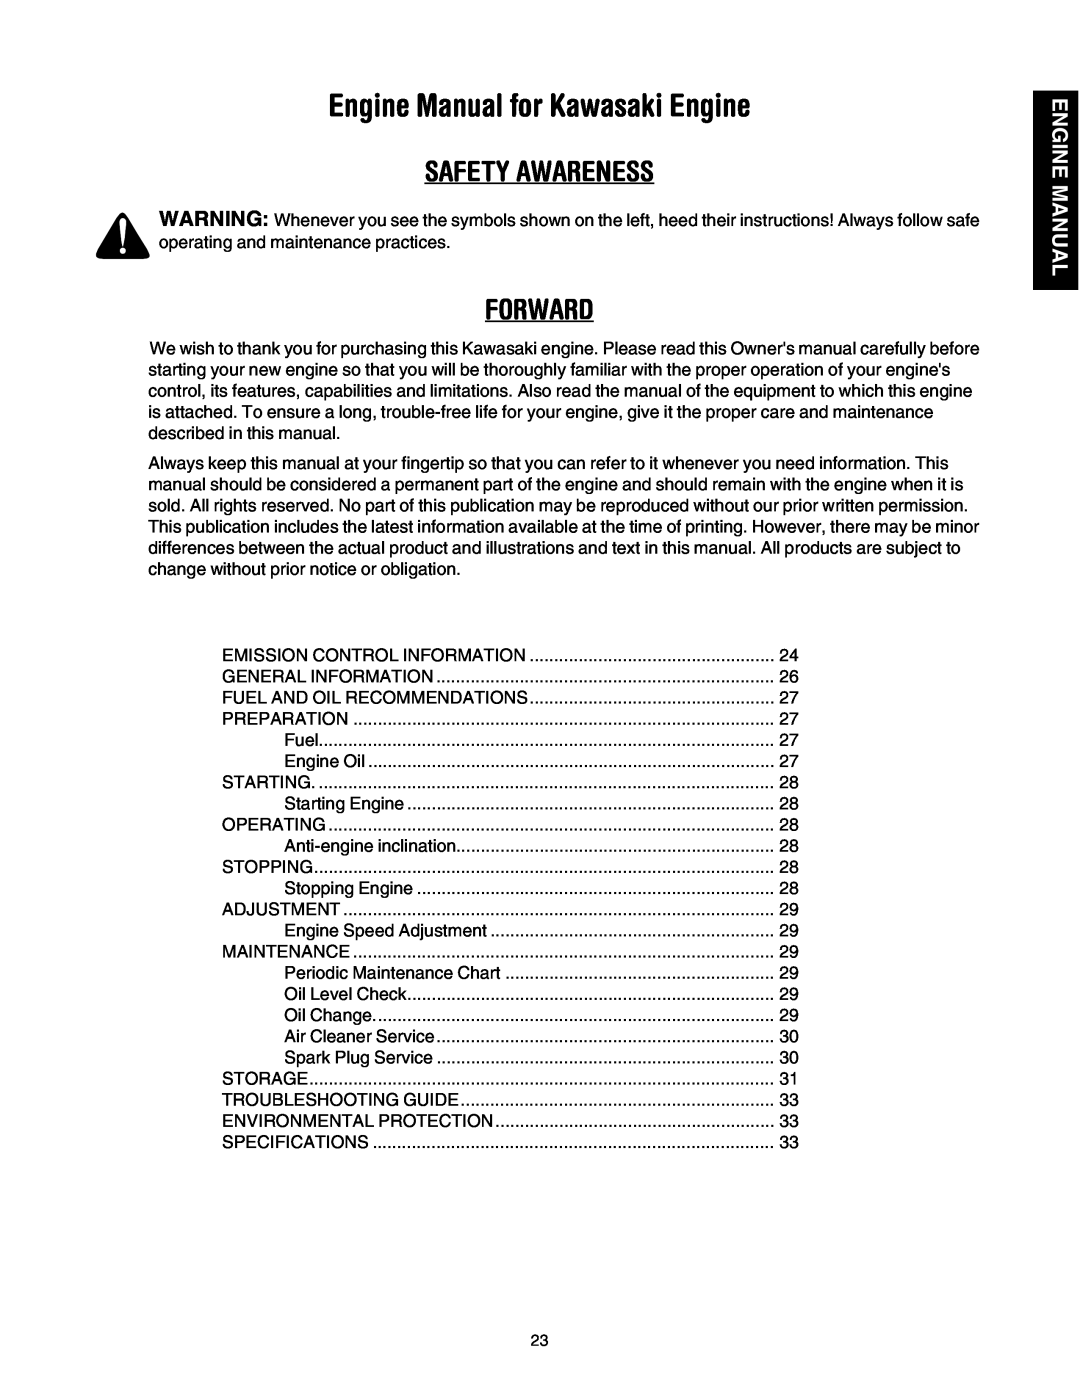 Cub Cadet E977C, 977A manual Engine Manual for Kawasaki Engine, Safety Awareness, Forward 